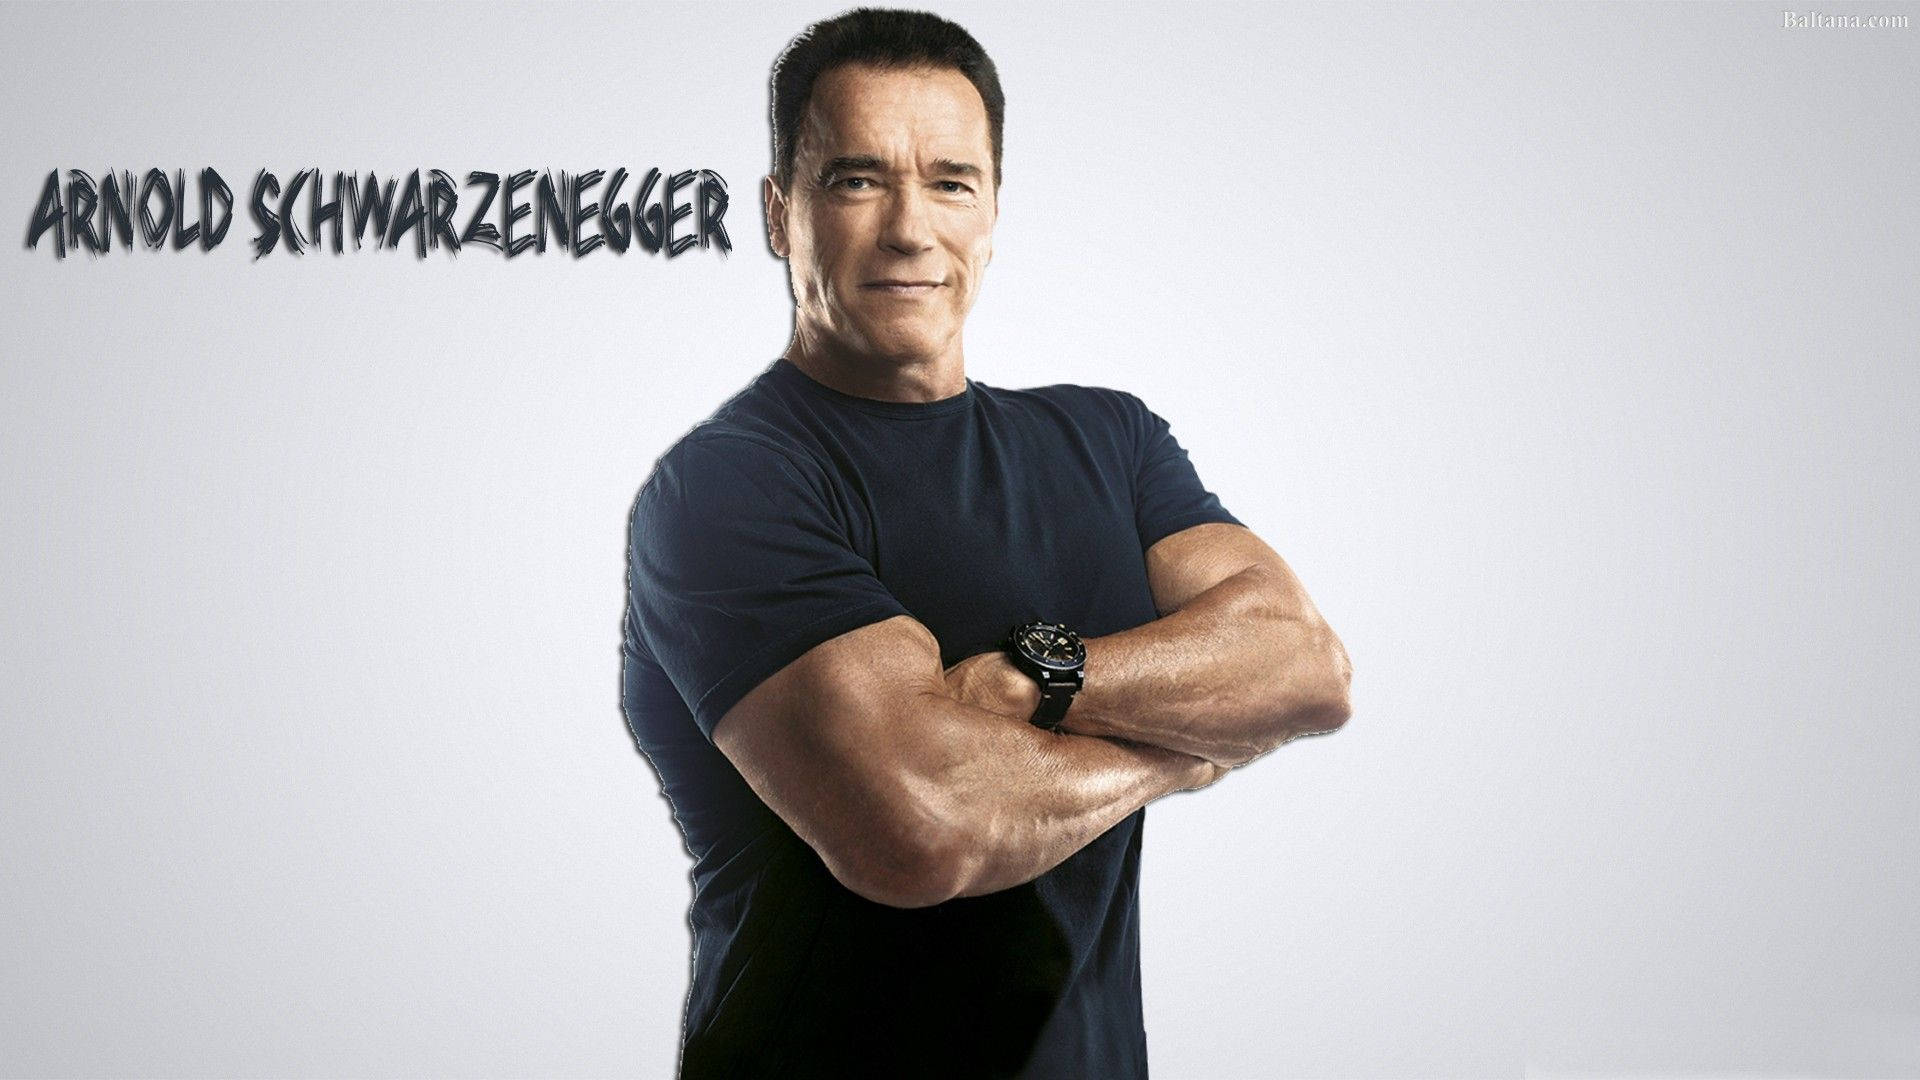 1920X1080 Arnold Schwarzenegger Wallpaper and Background